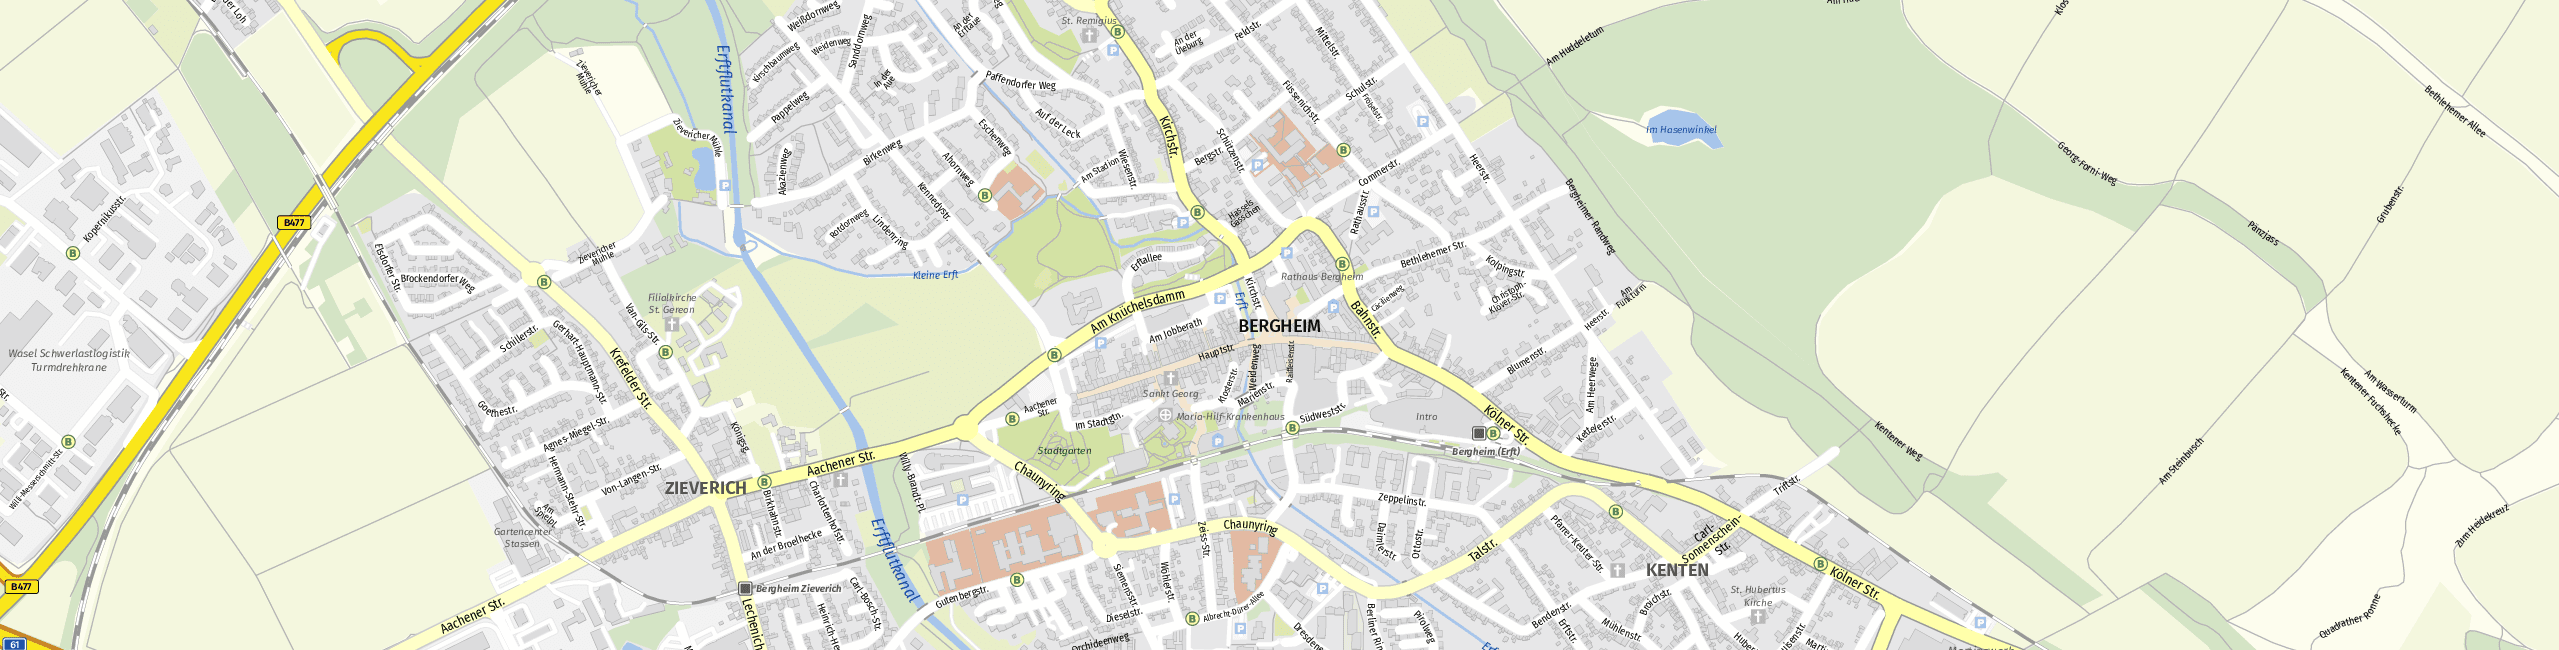 Stadtplan Bergheim zum Downloaden.